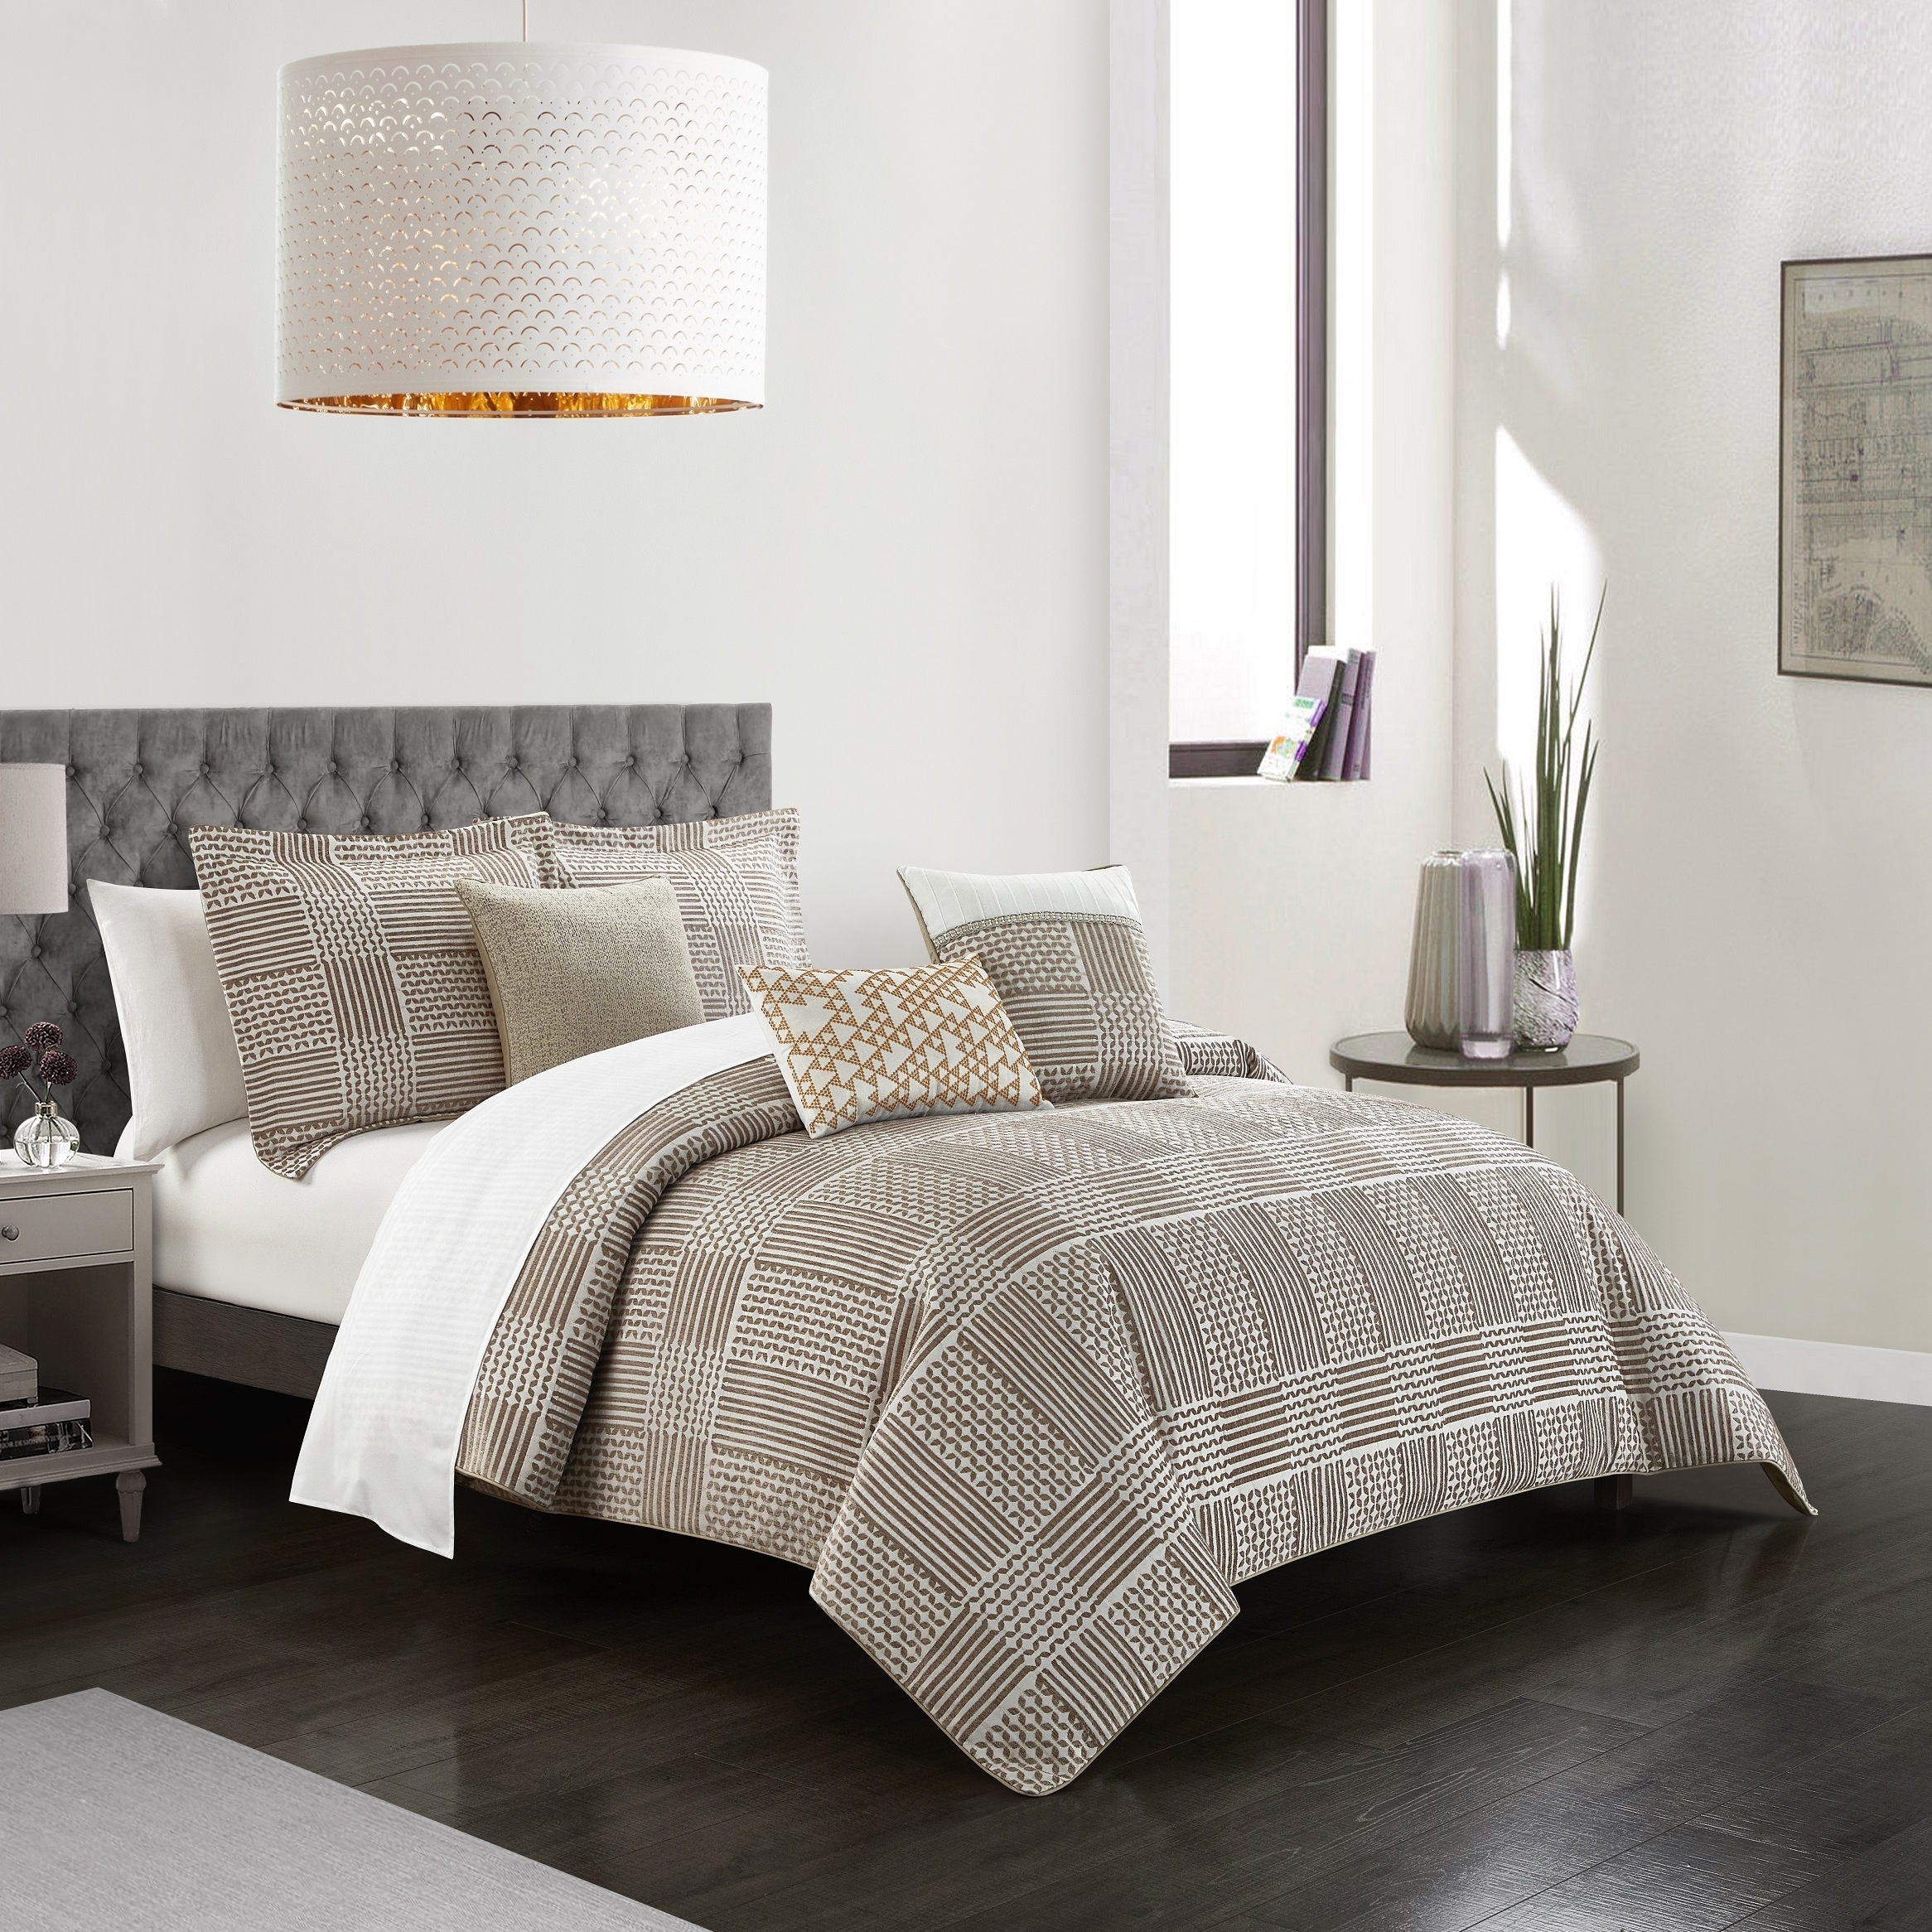 Odhi 6 Or 10 Piece Comforter Set Chenille Geometric Pattern Design Bedding - Beige, Queen